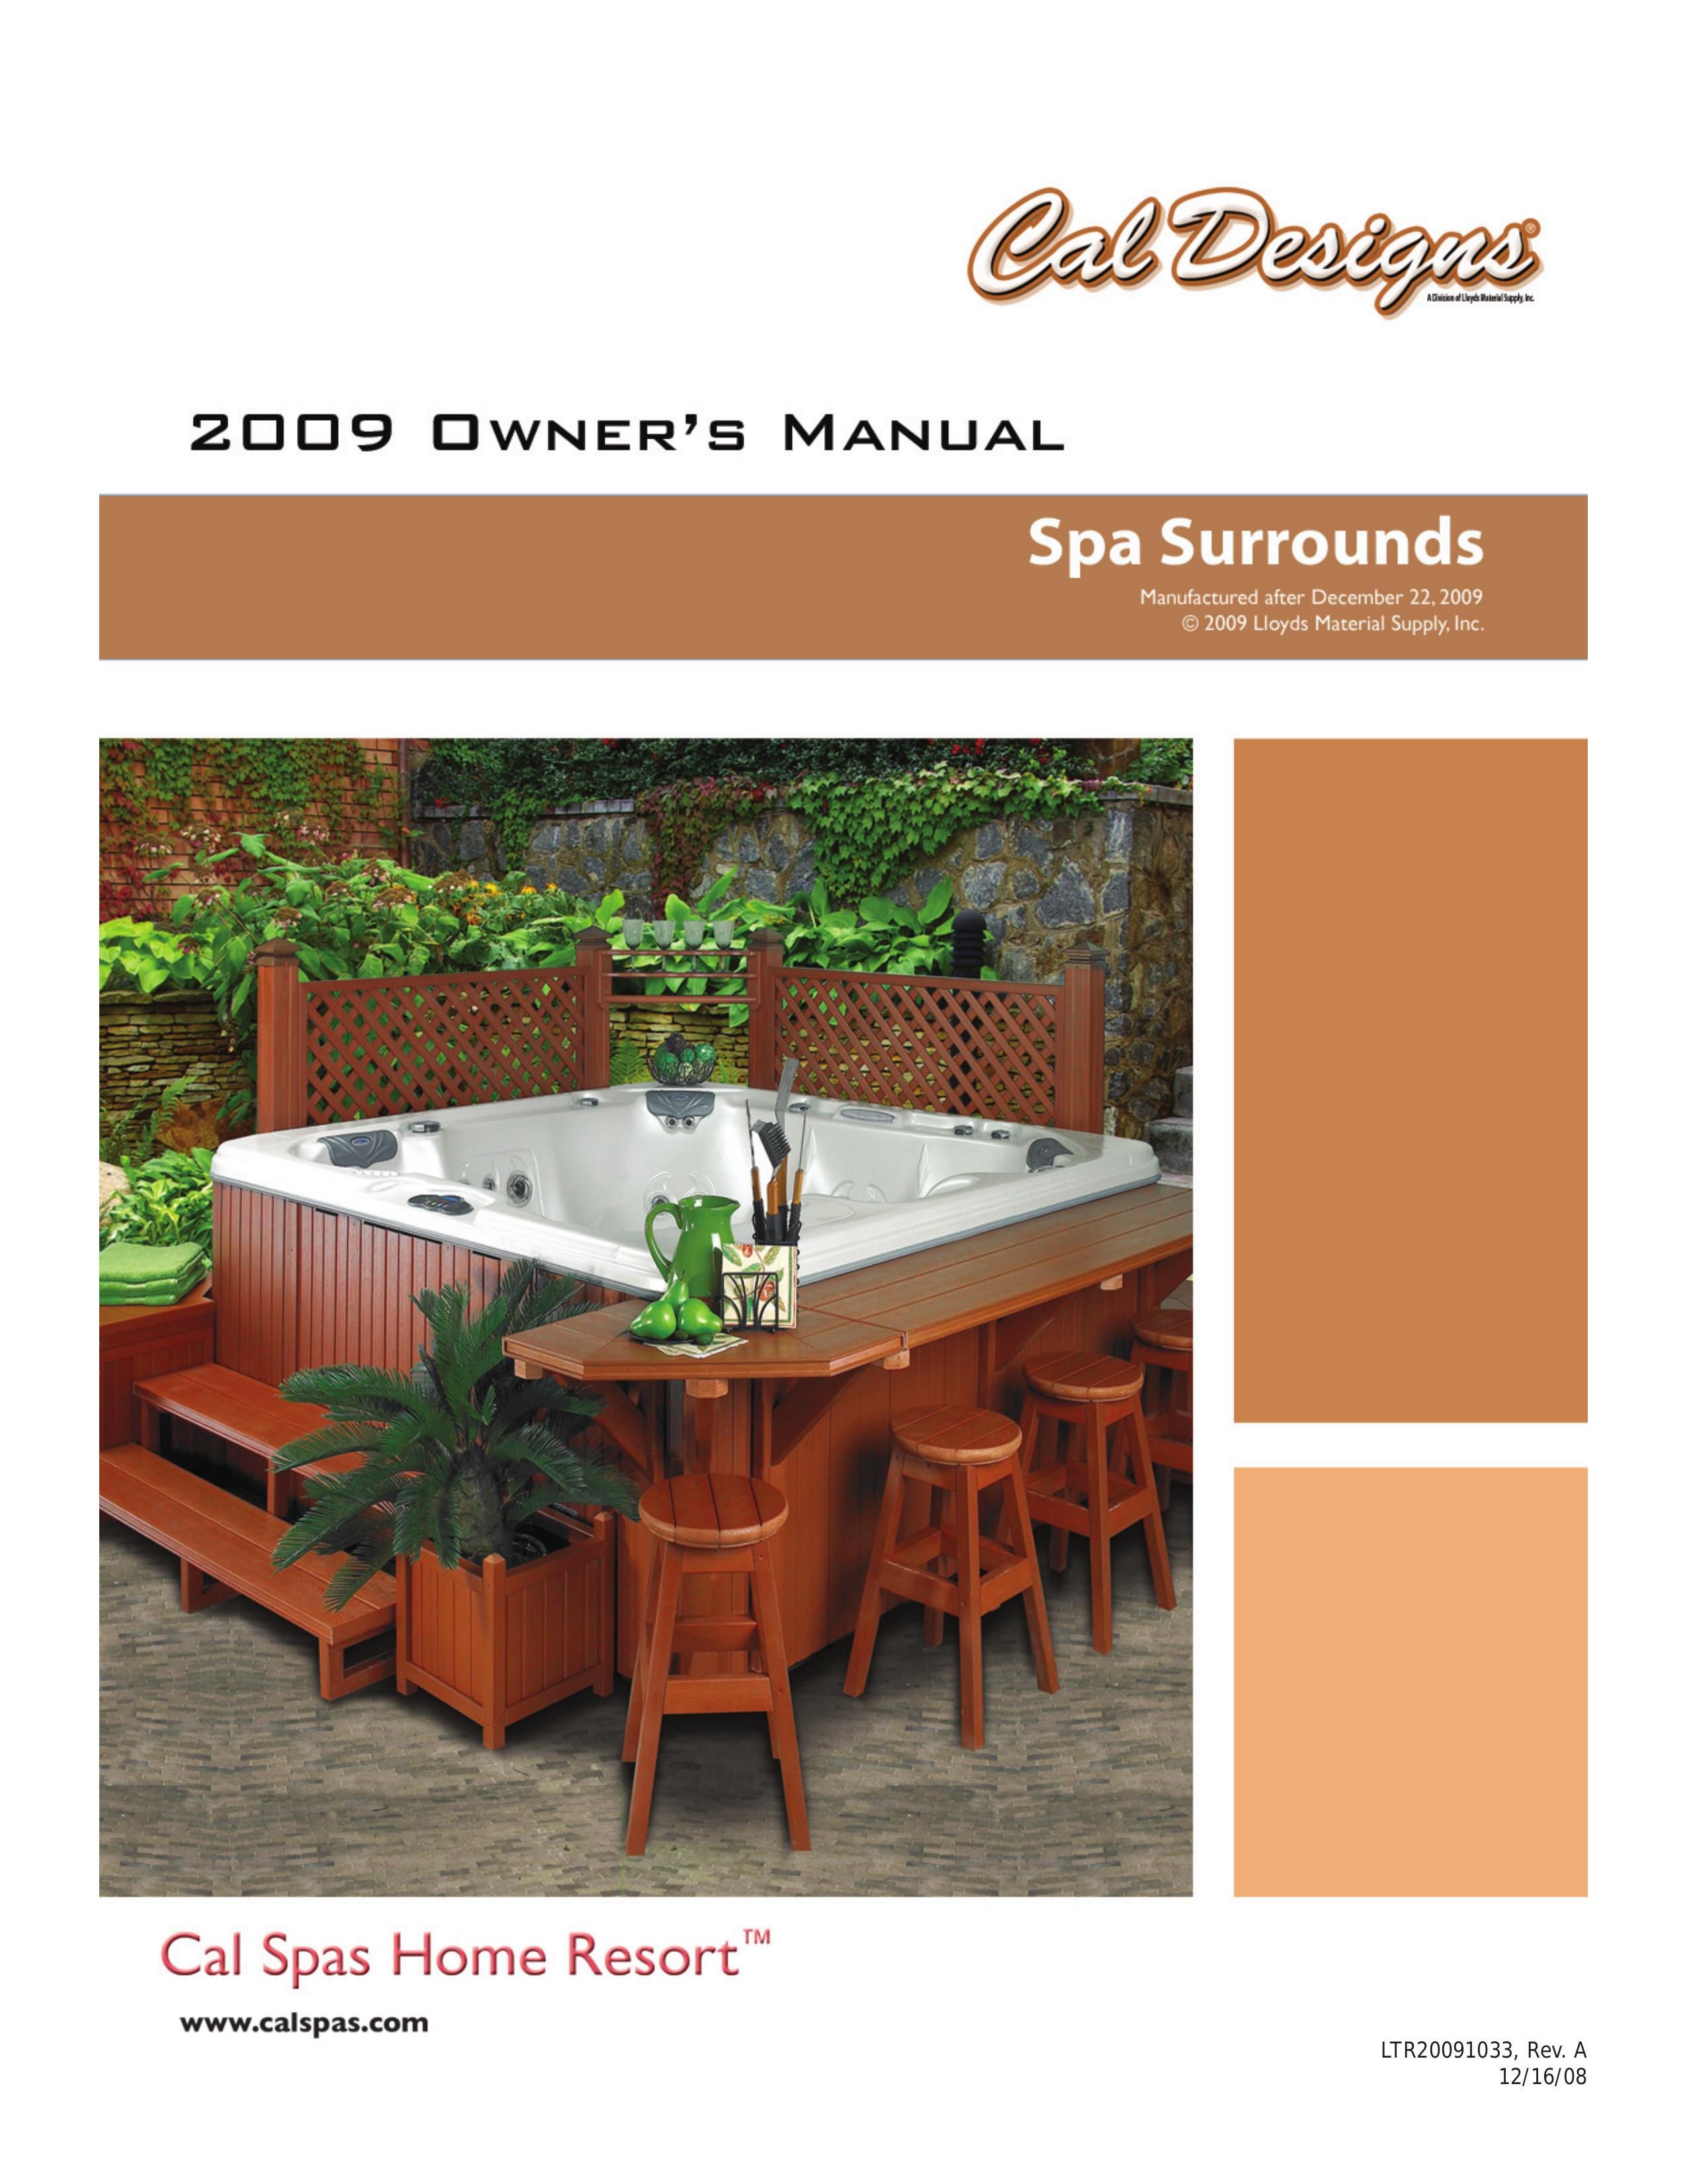 Cal Spas Spa Surrounds Hot Tub User Manual